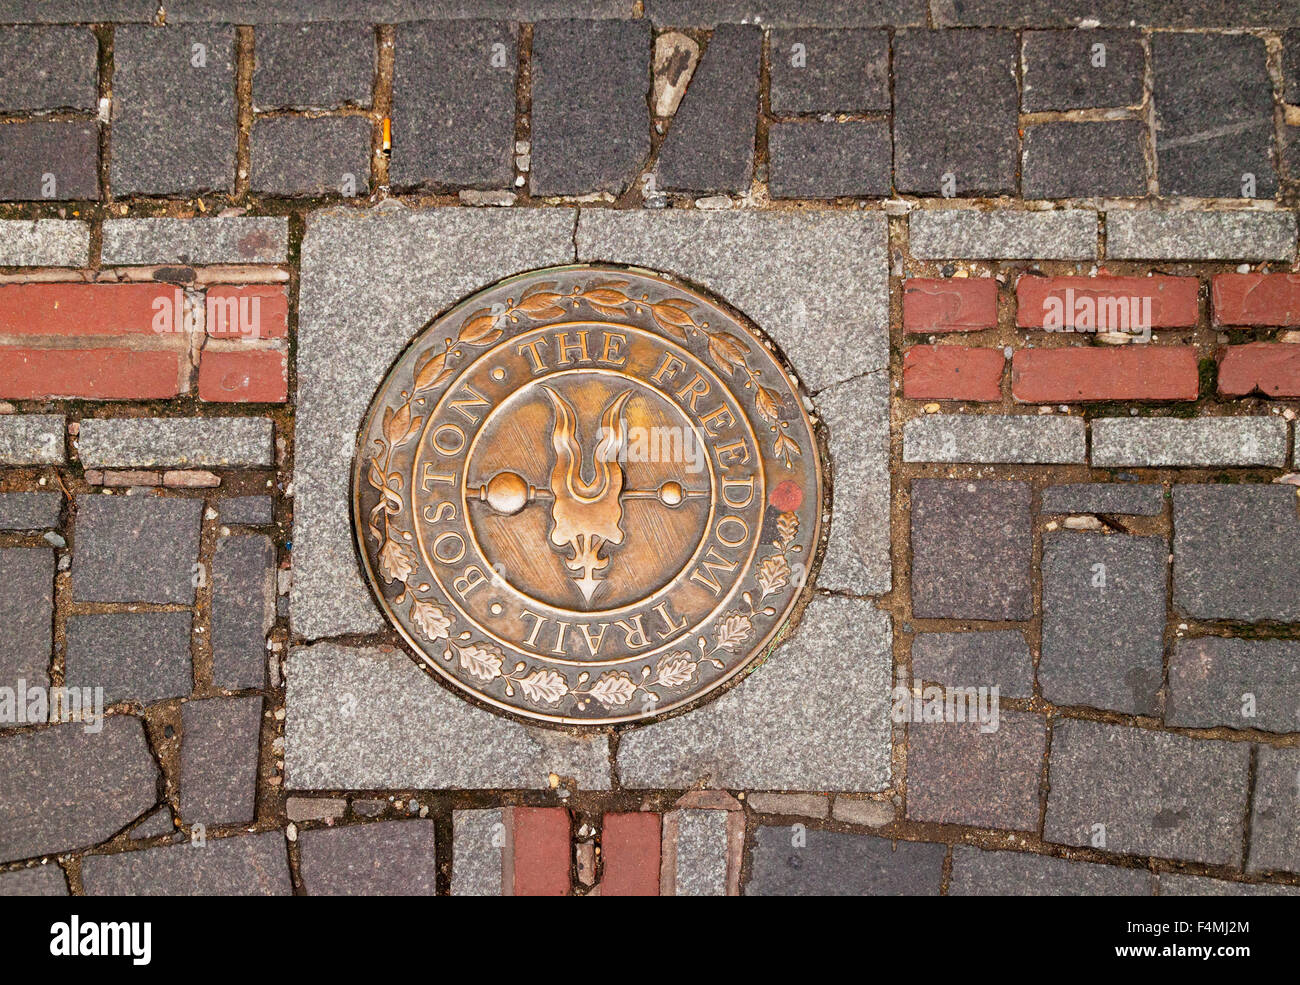 Symbol of the Boston Freedom Trail walk on the sidewalk, Boston, Massachusetts USA Stock Photo